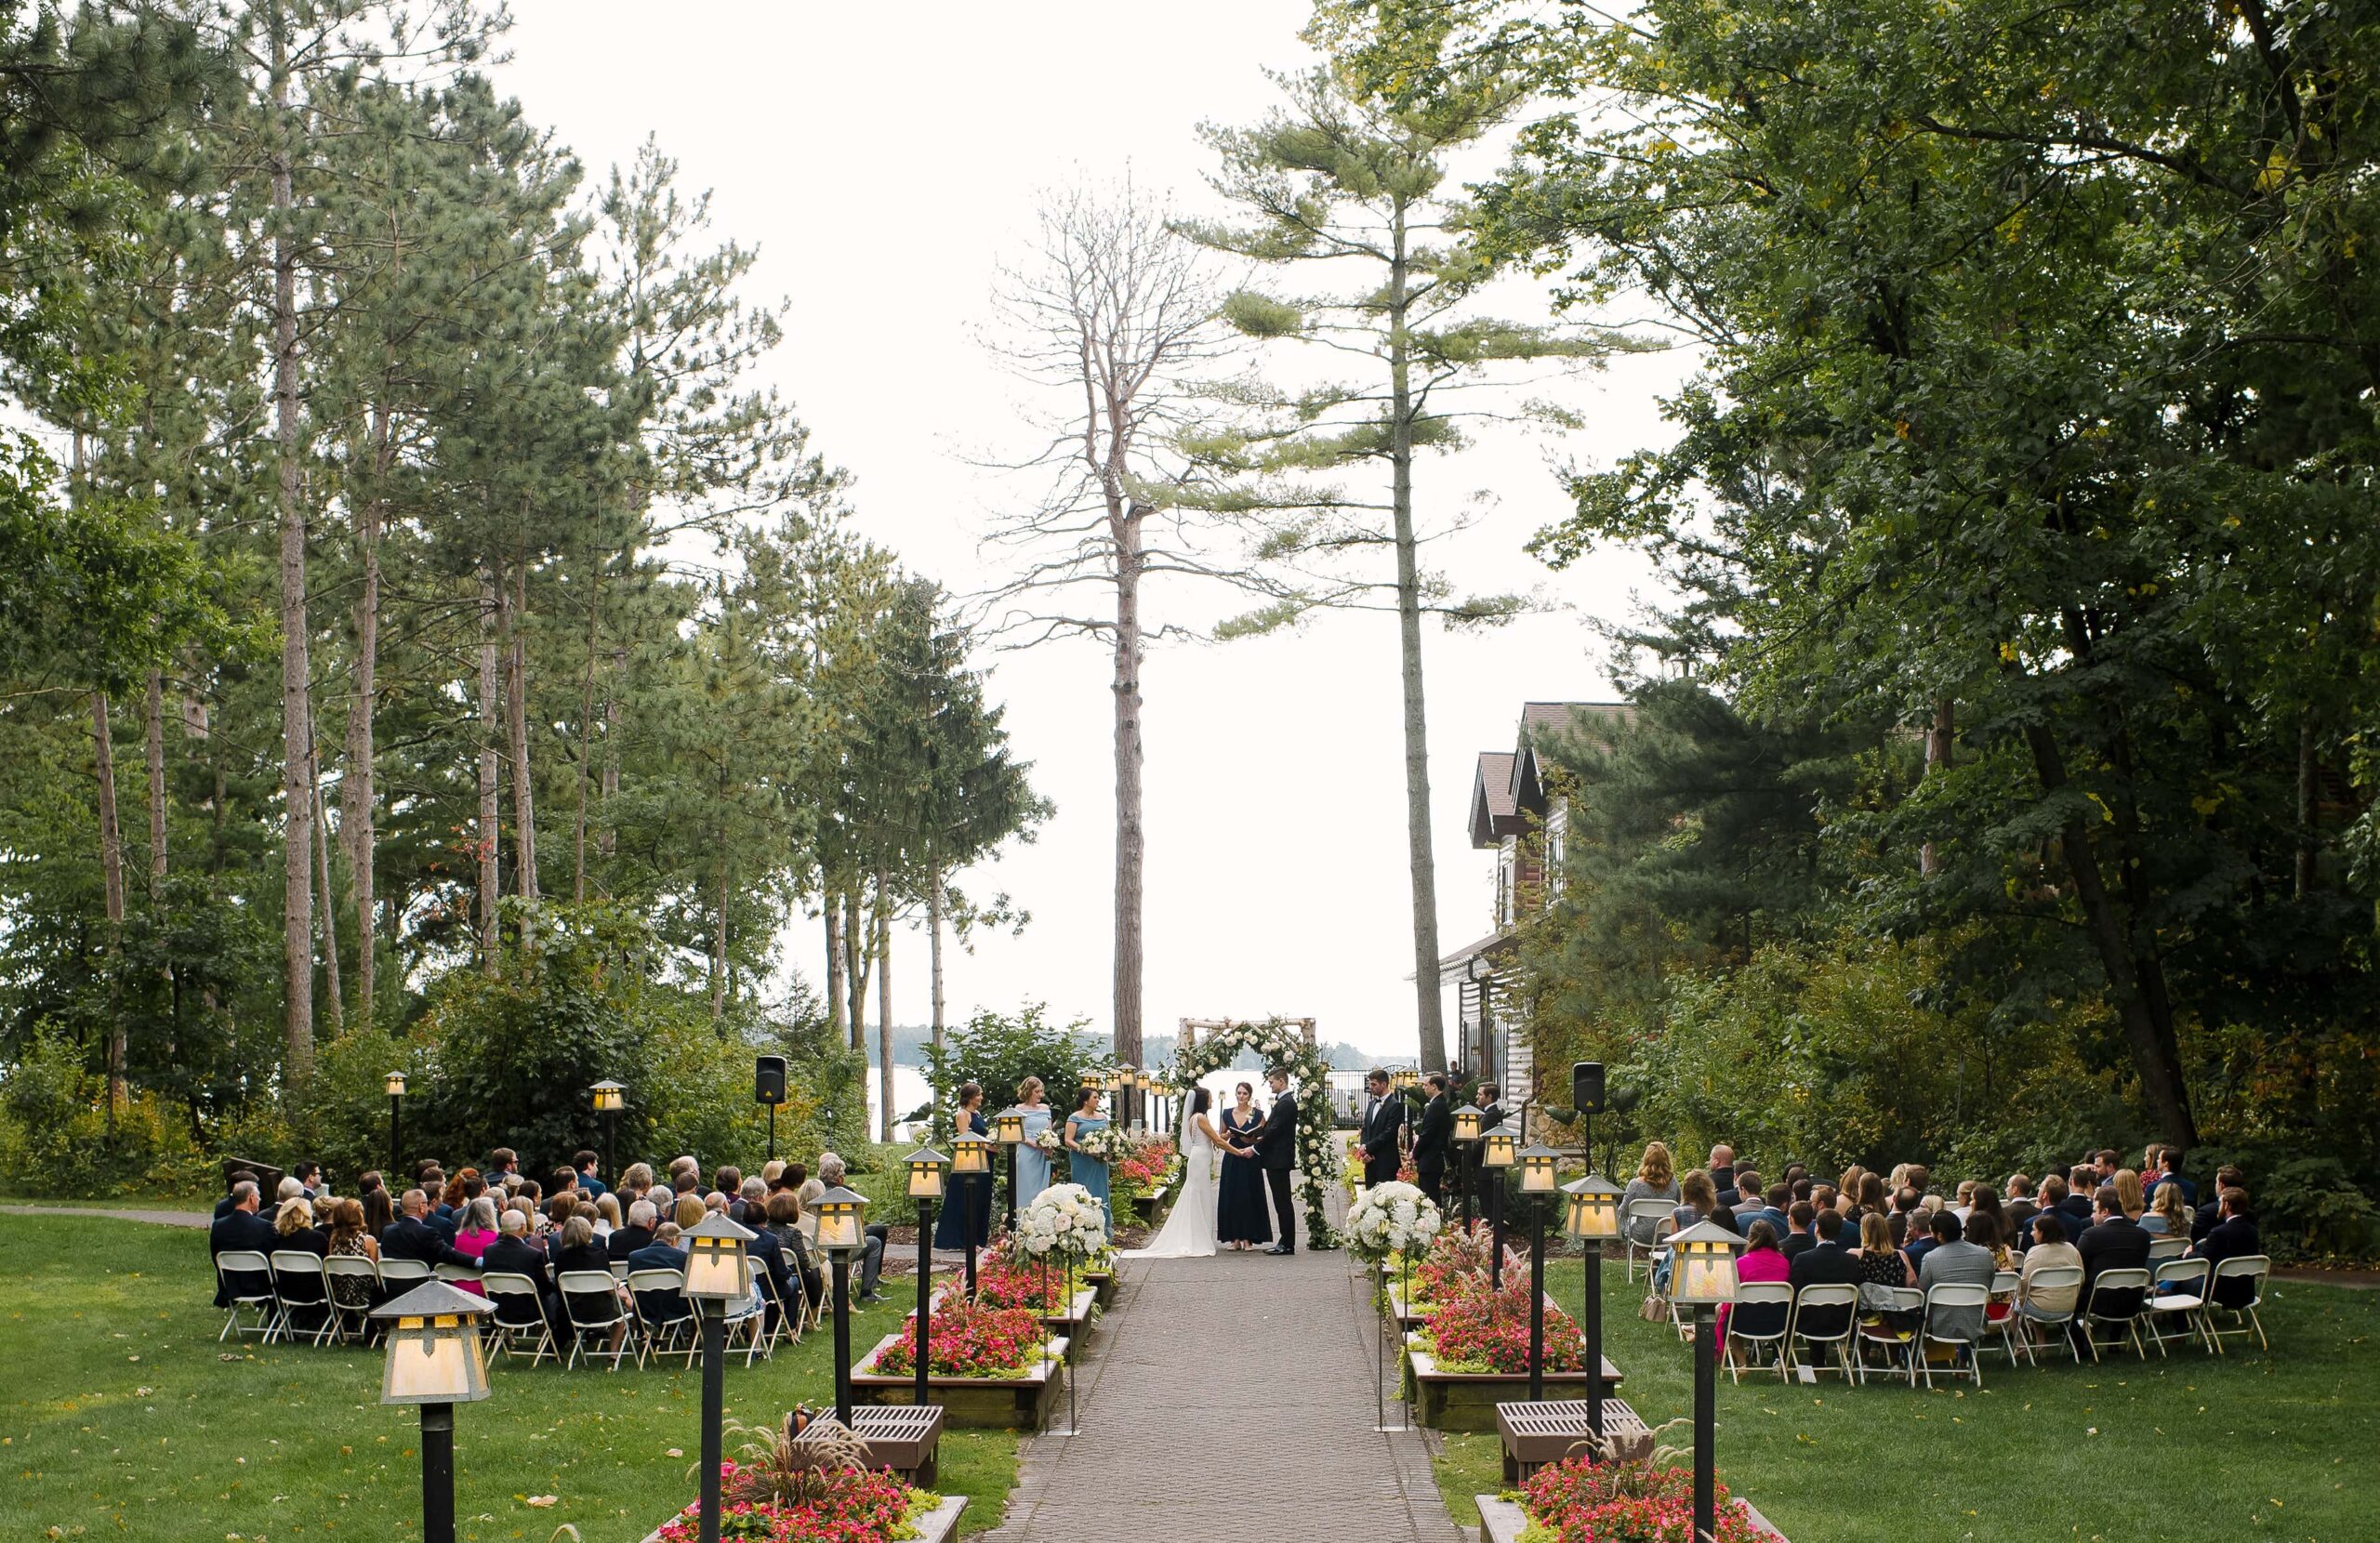 Ceremony at Grand View lodge Minnesota wedding venue